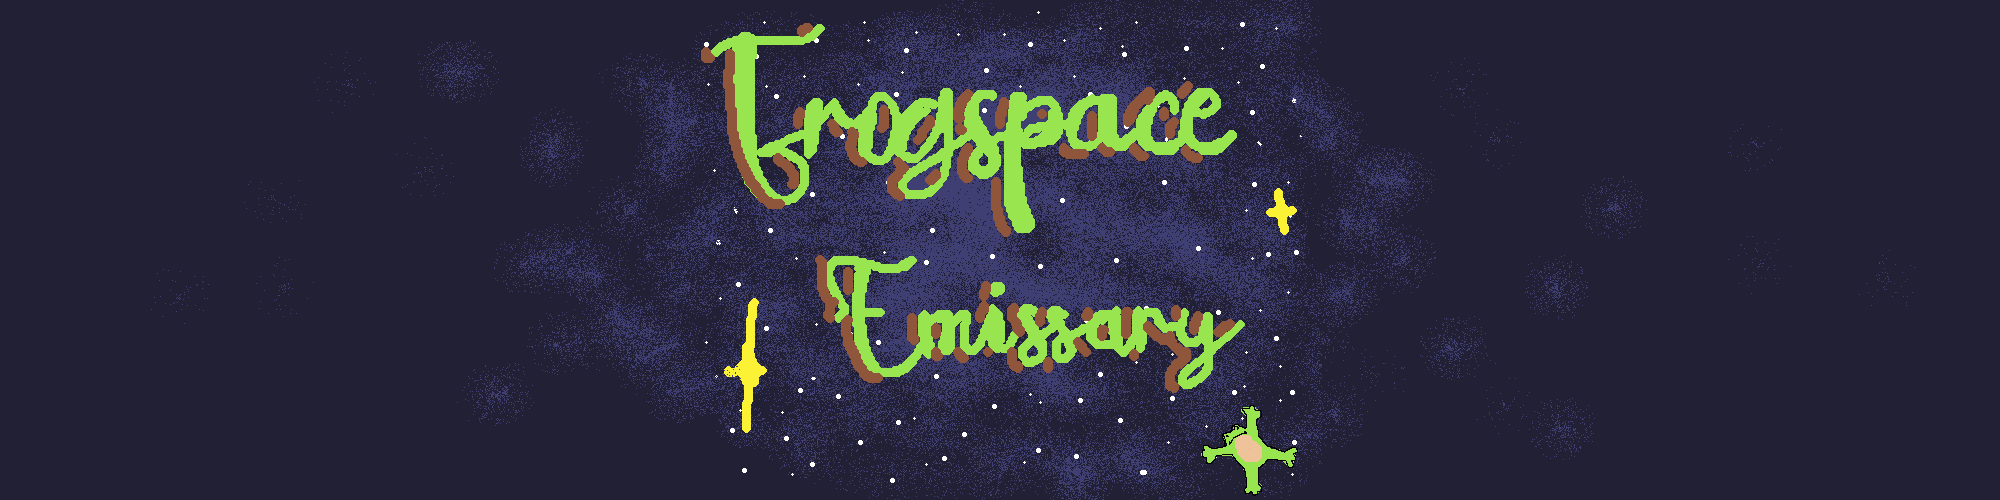 Frogspace Emissary